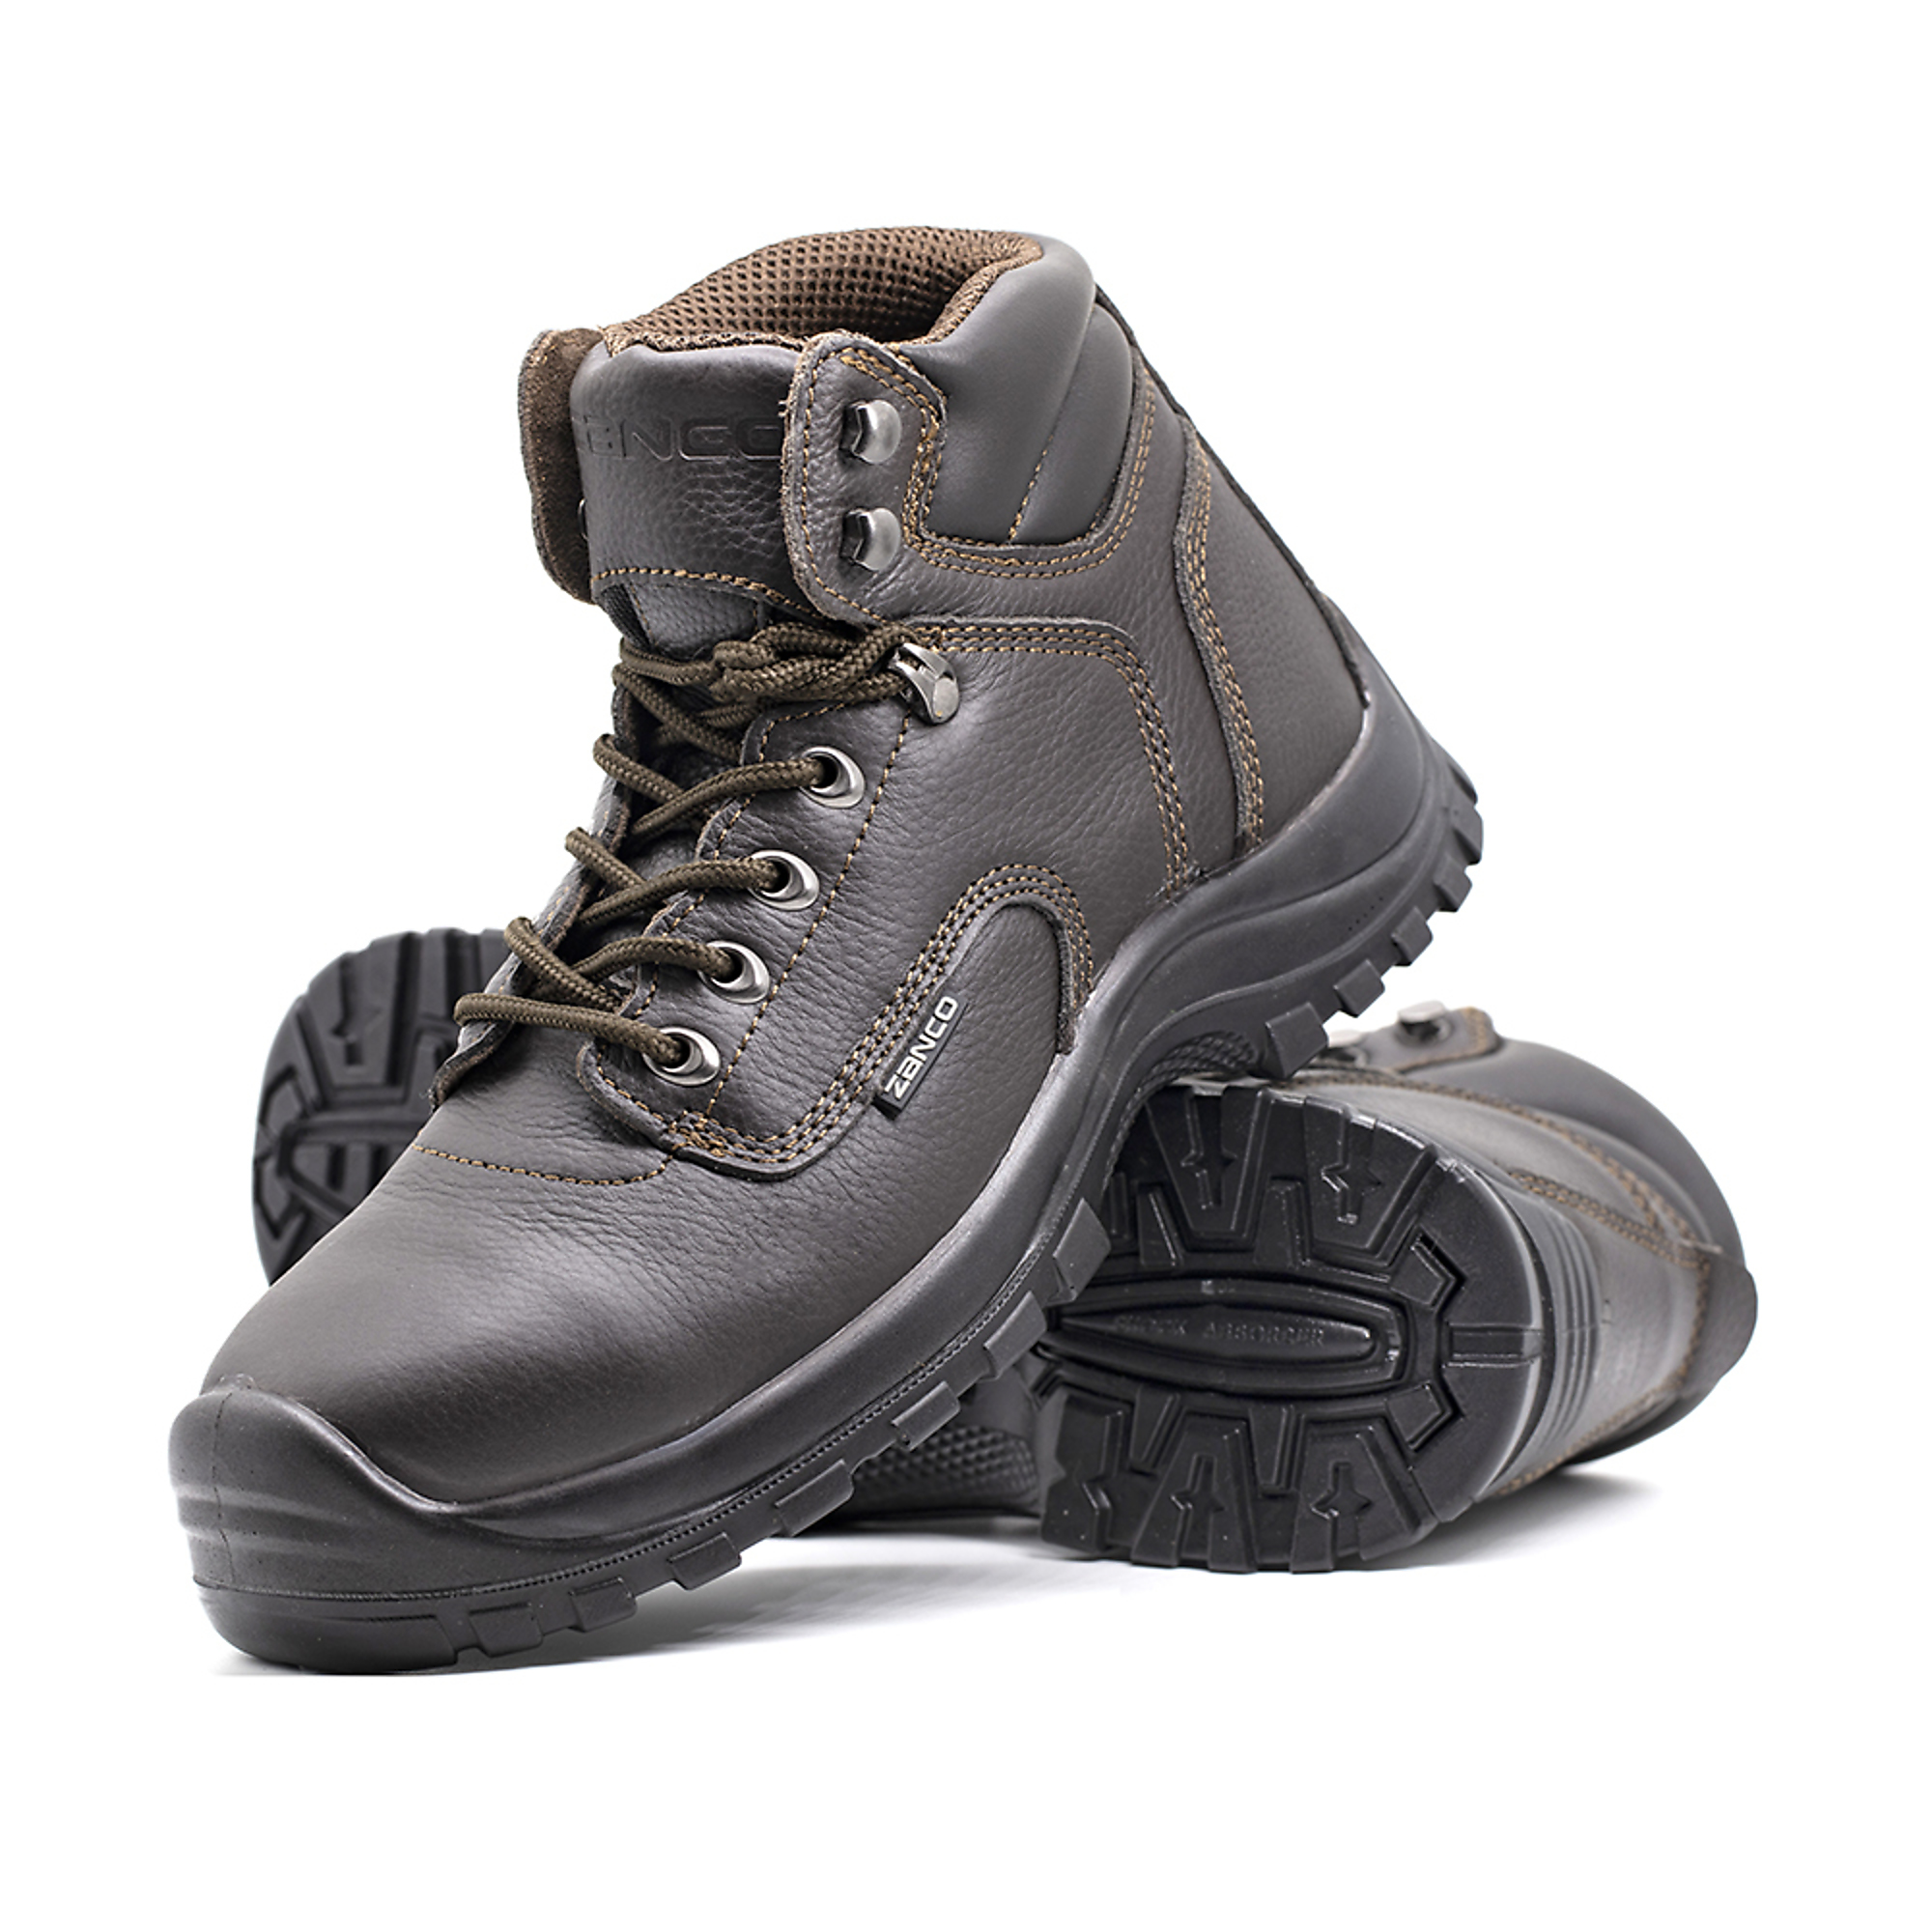 Zanco, Men's Waterproof,Steel toe,EH,Safety boots, Size 8, Width Medium, Color BROWN, Model 7668-SE-8